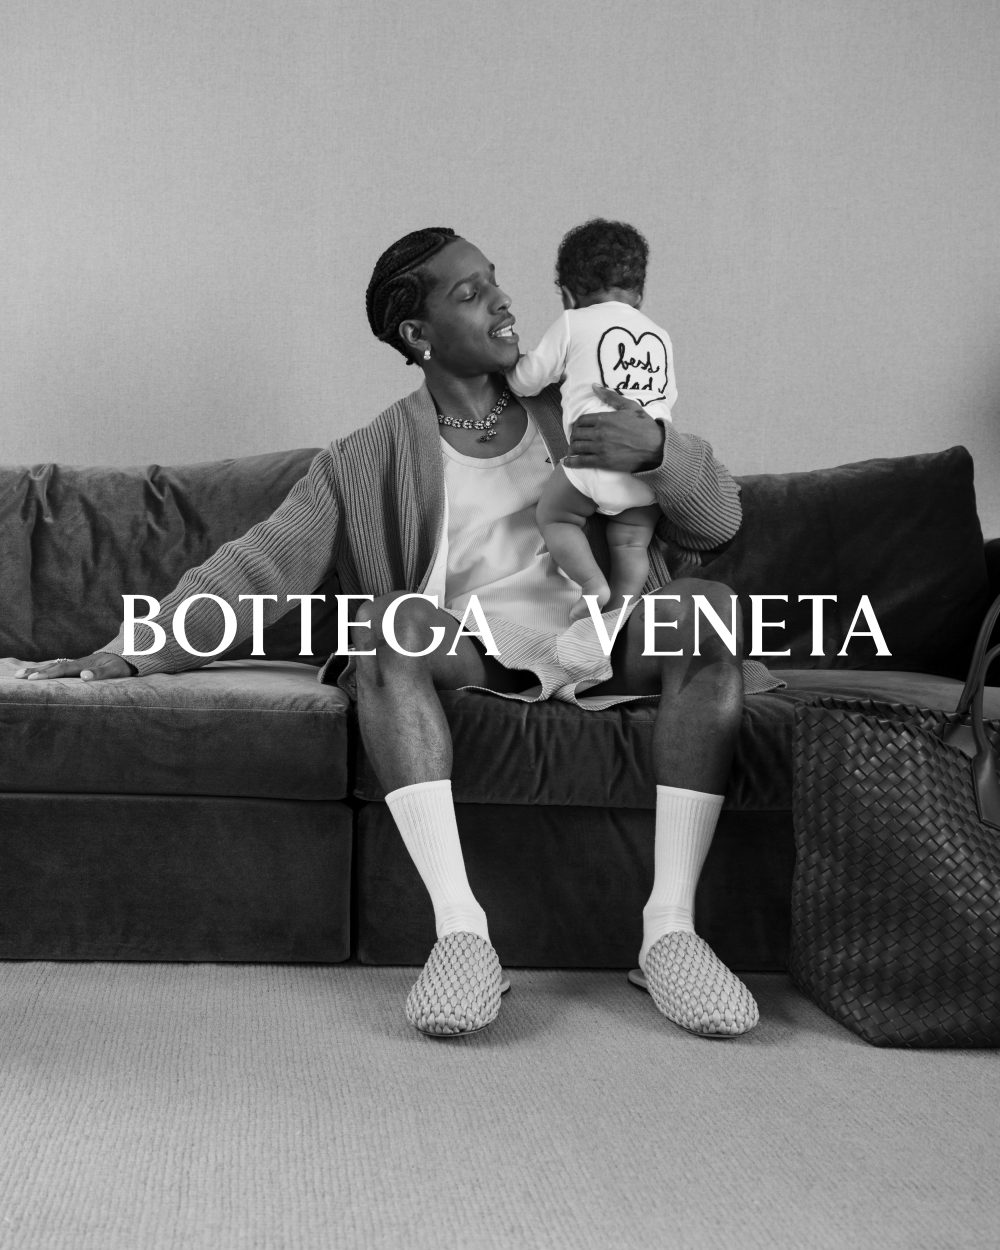 BOTTEGA VENETA_PORTRAITS OF FATHERHOOD_4x5_full_A01